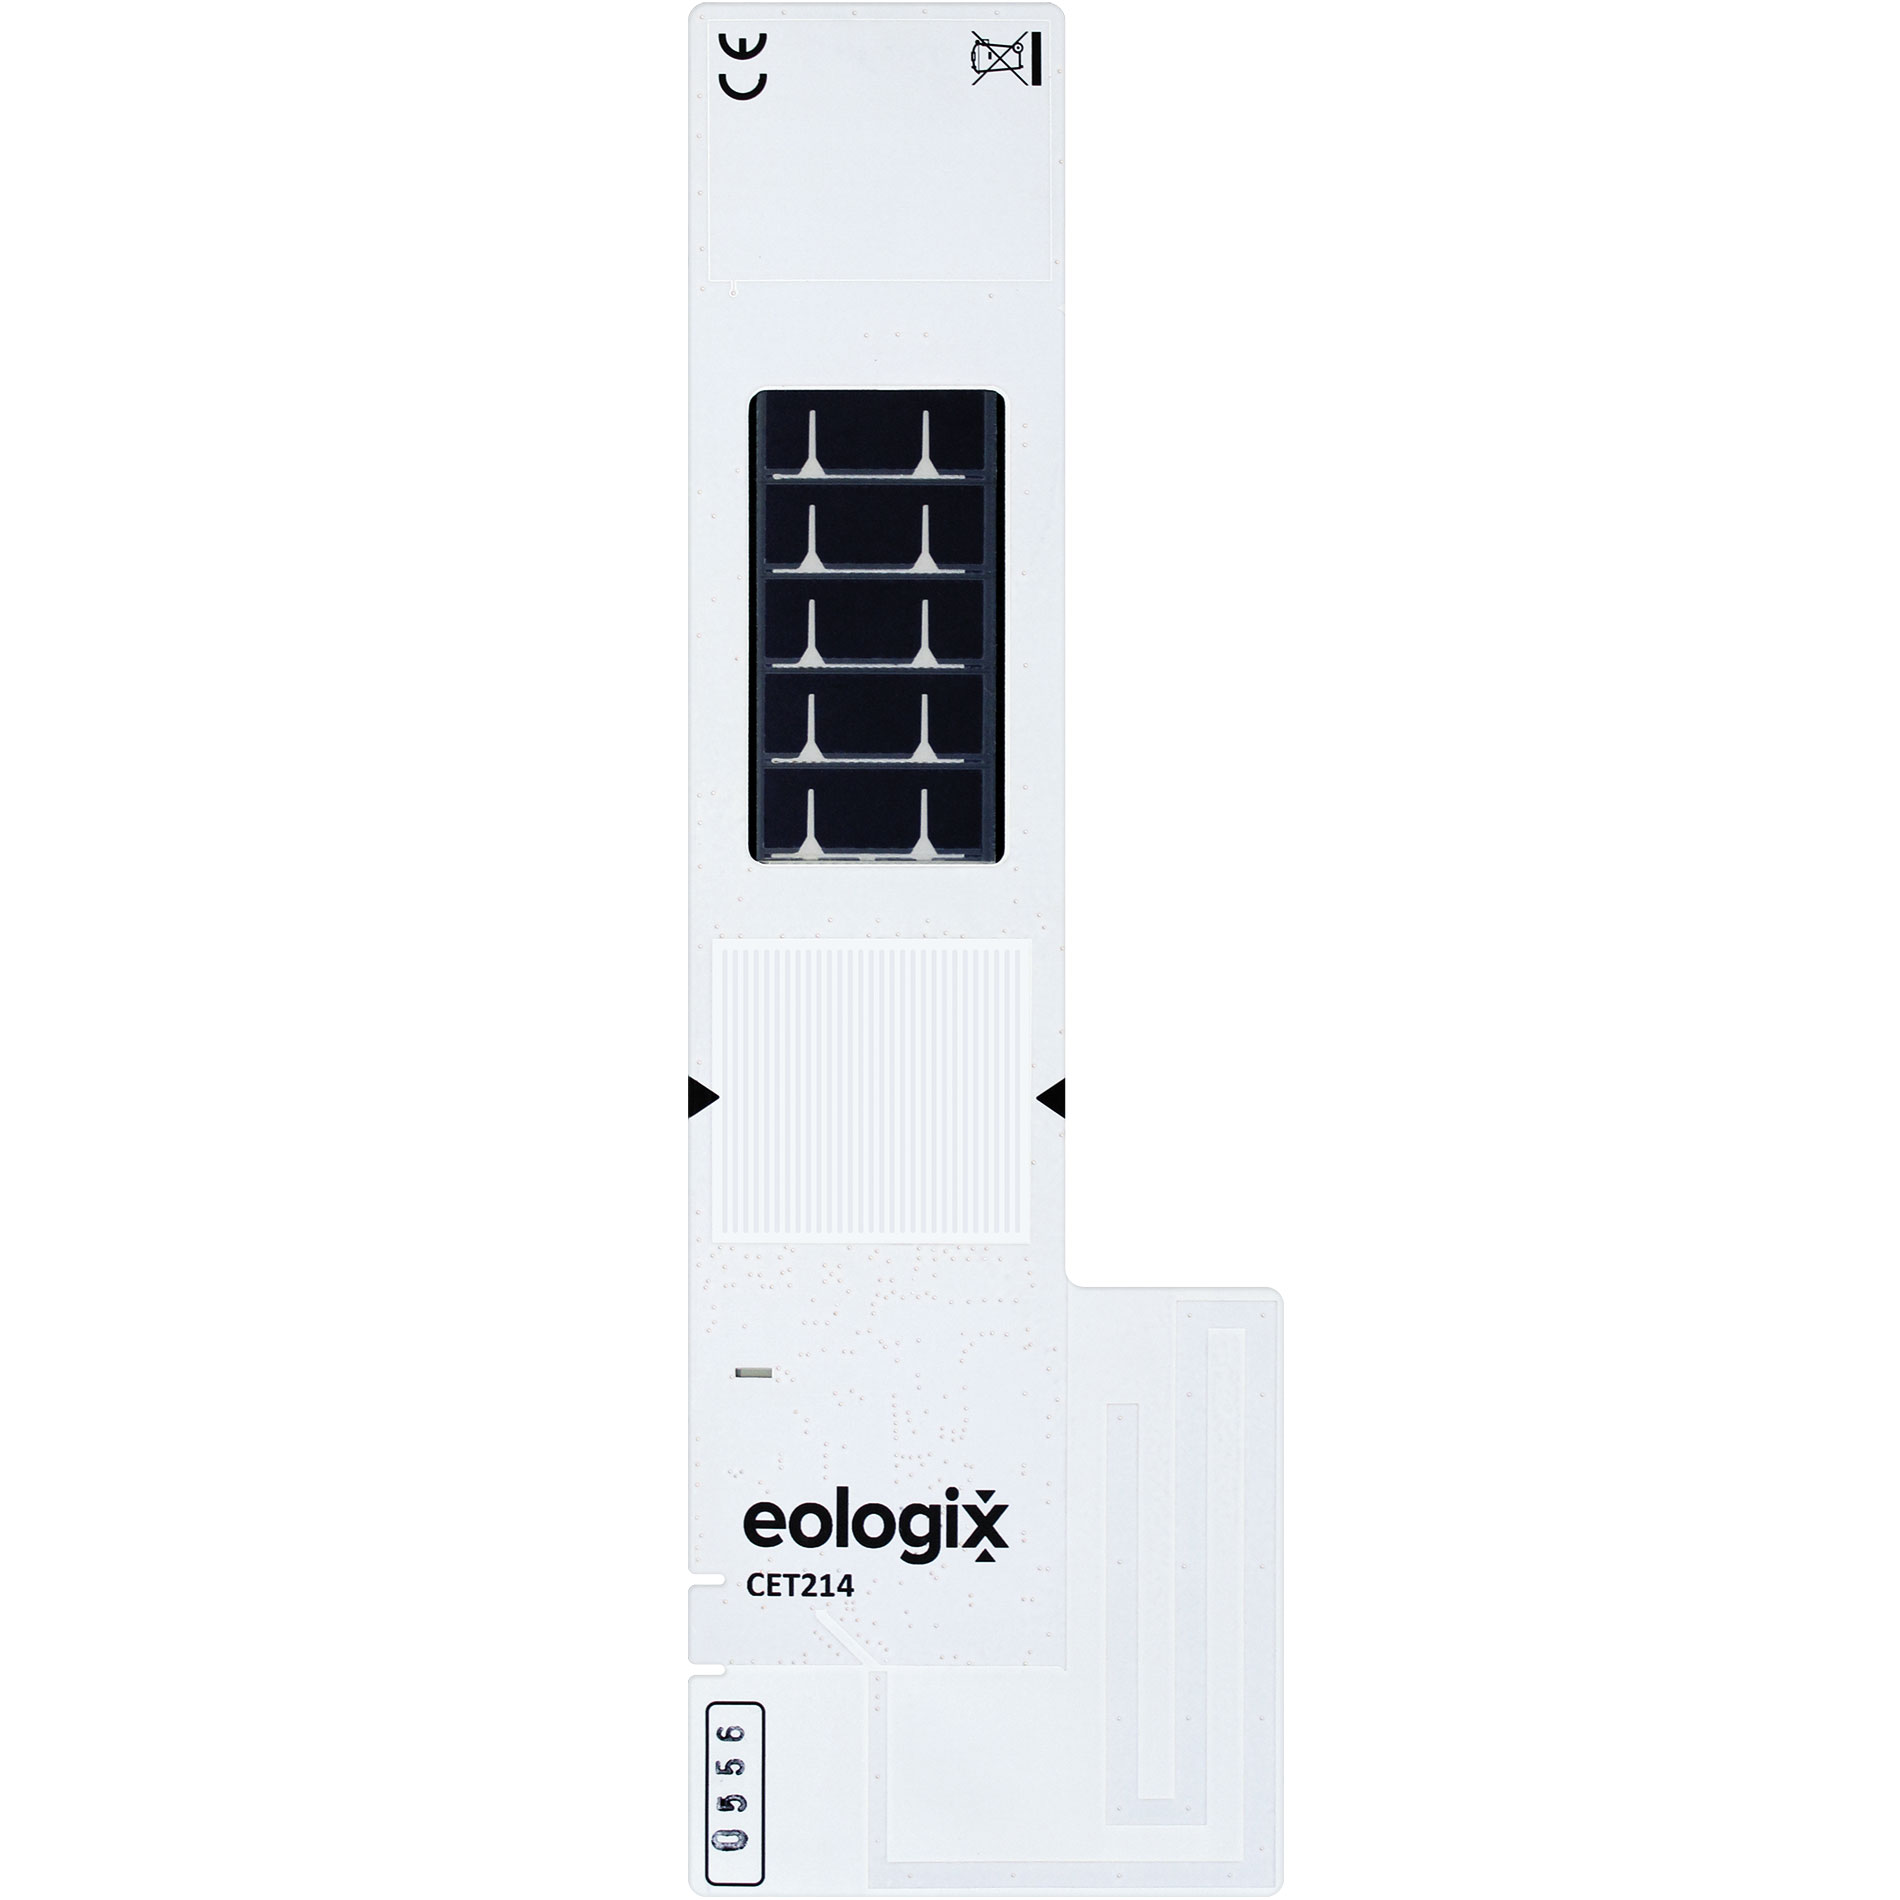 eologix Sensorsystem - Sensor für drahtlose Eisdetektion